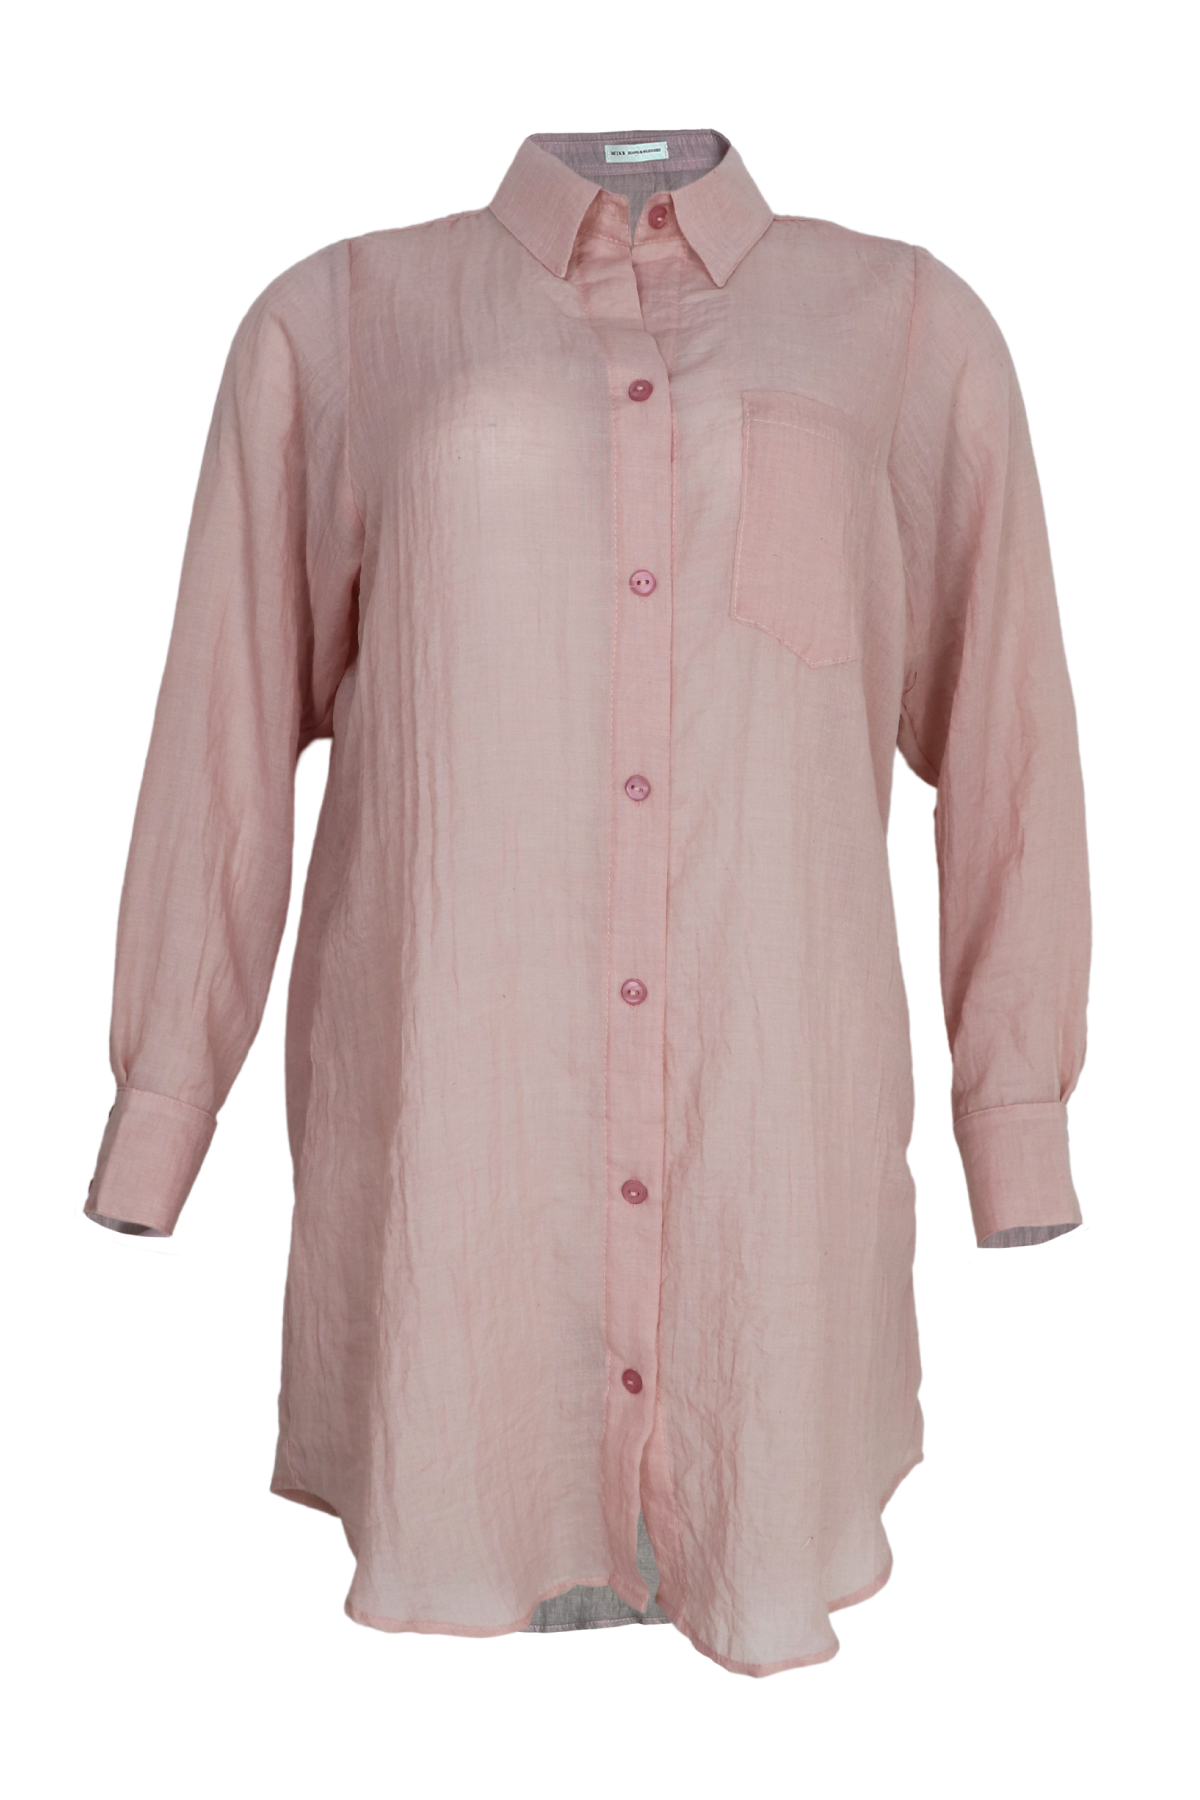 Hermosa camisa manga larga transparente color palo de rosa